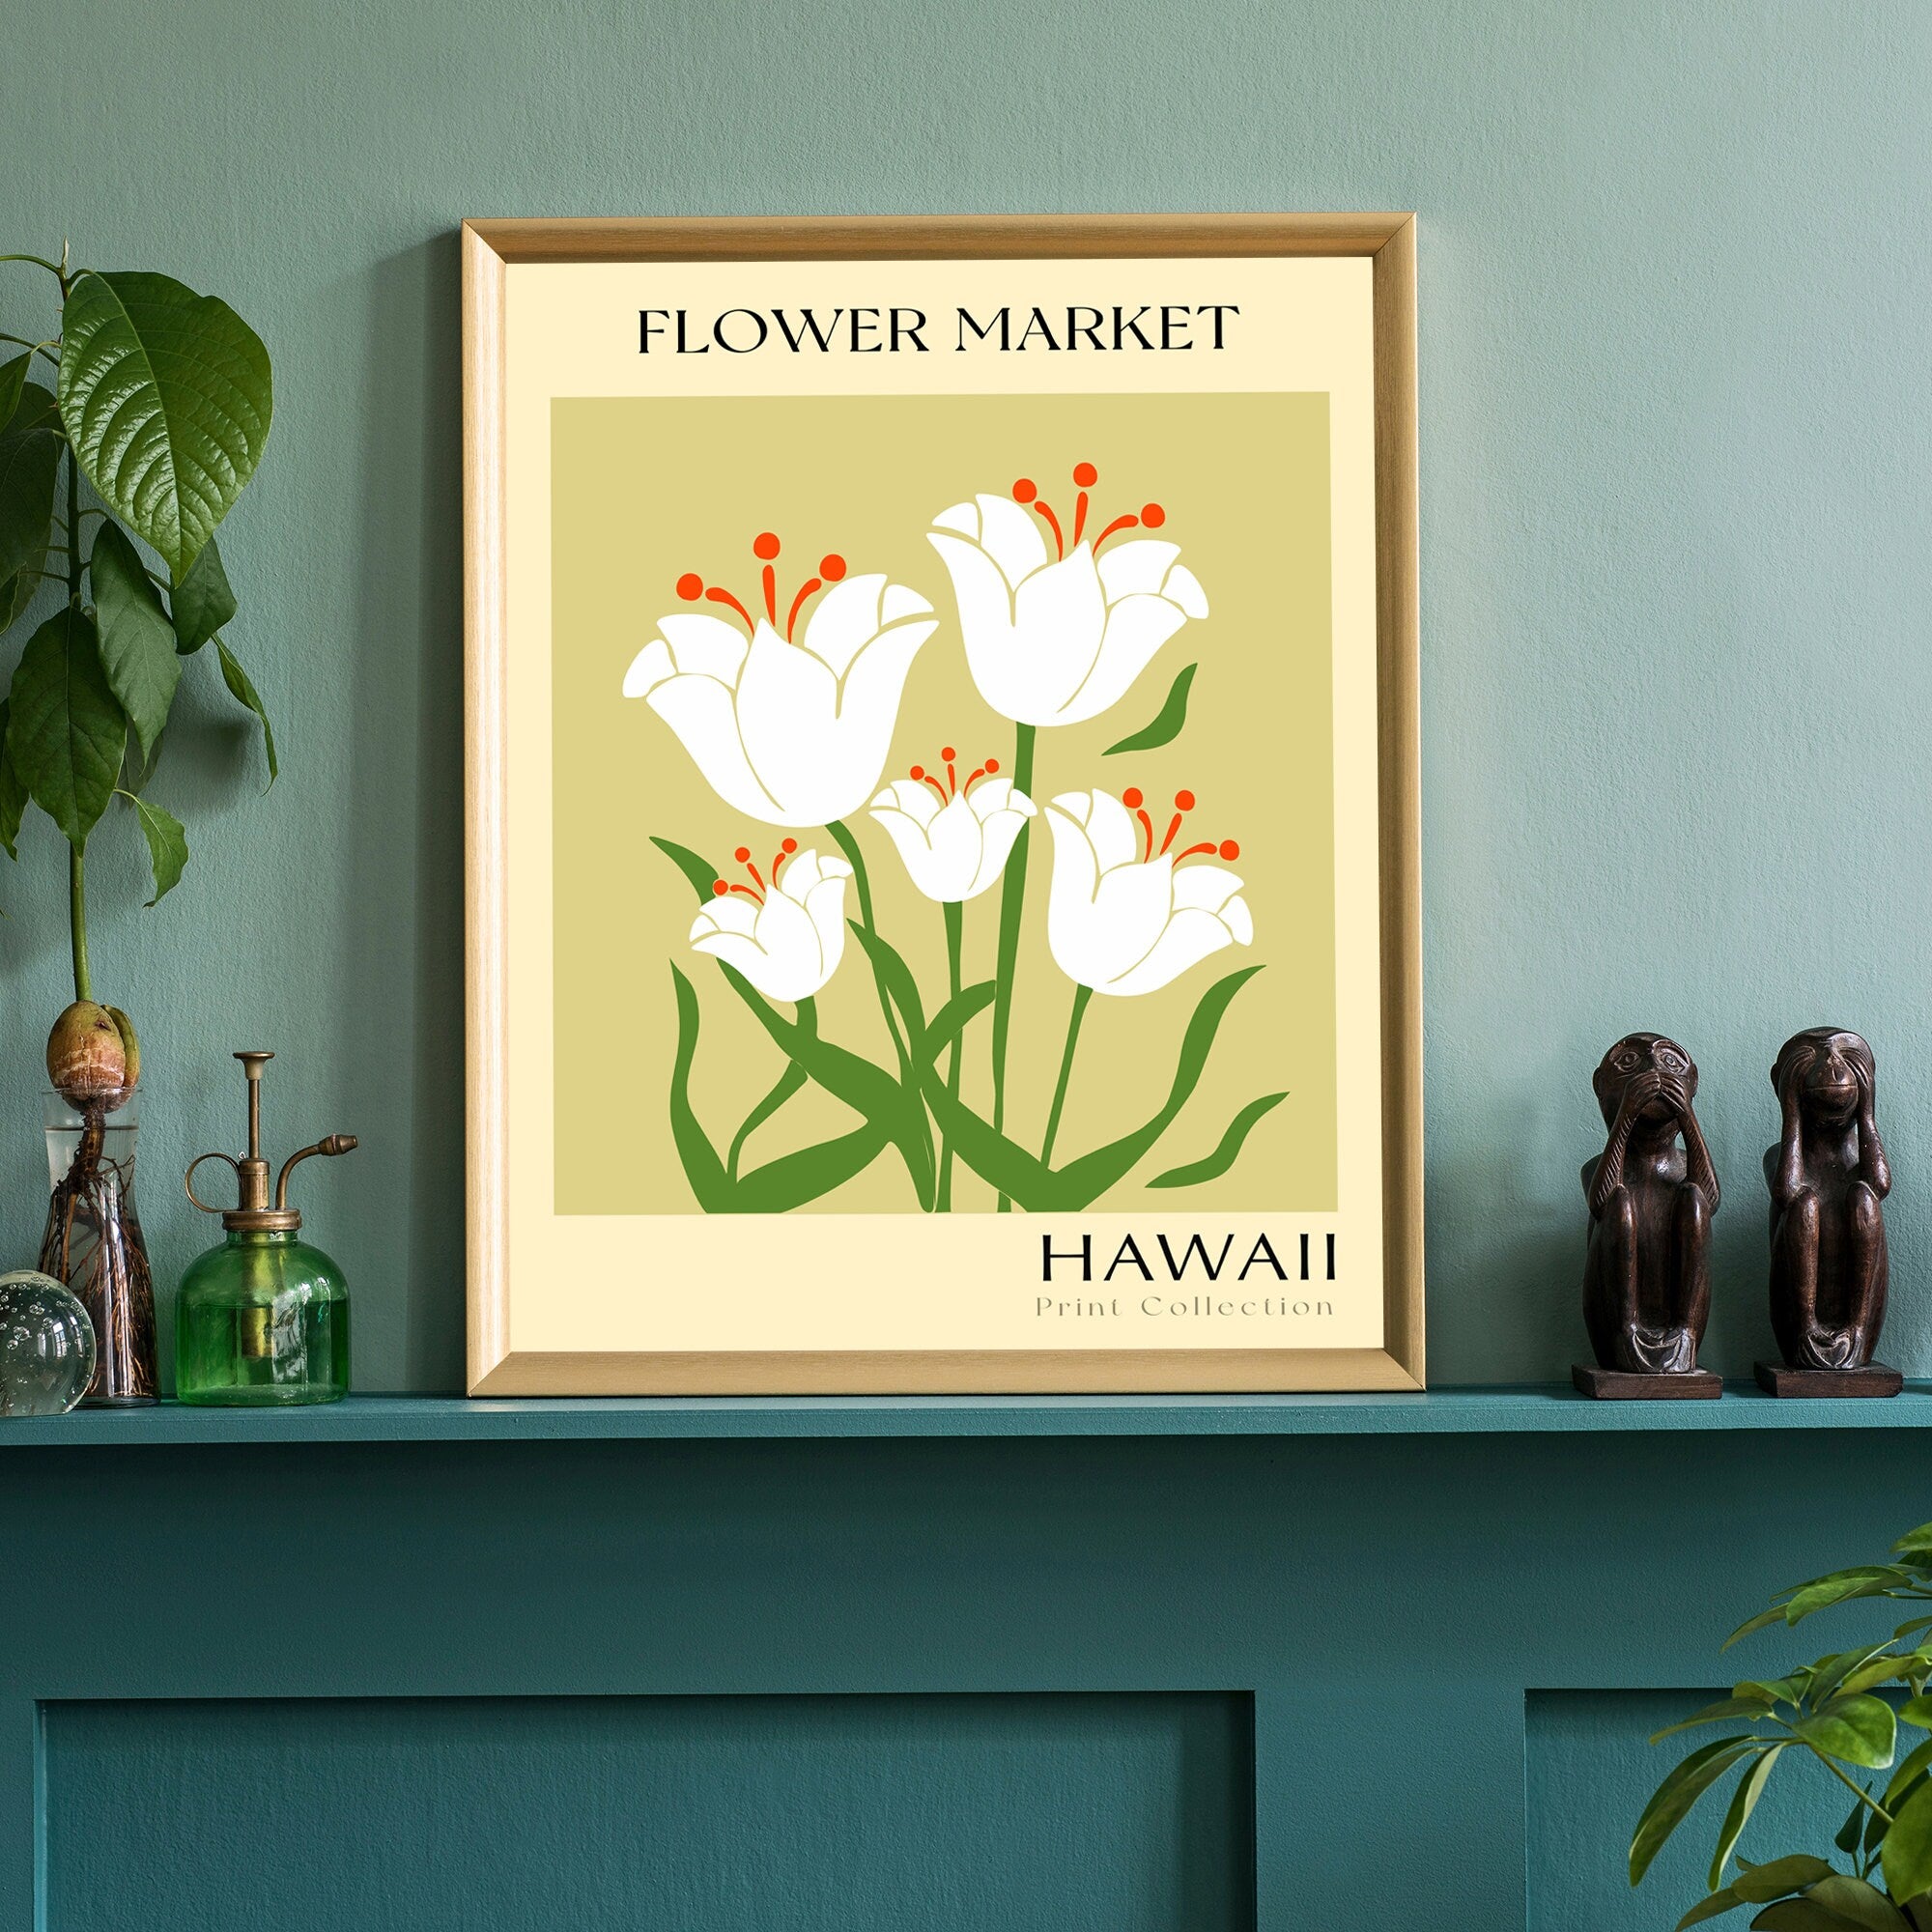 Hawaii flower print, USA states poster, Hawaii flower market poster, Botanical posters, Nature poster artwork, Boho floral wall art